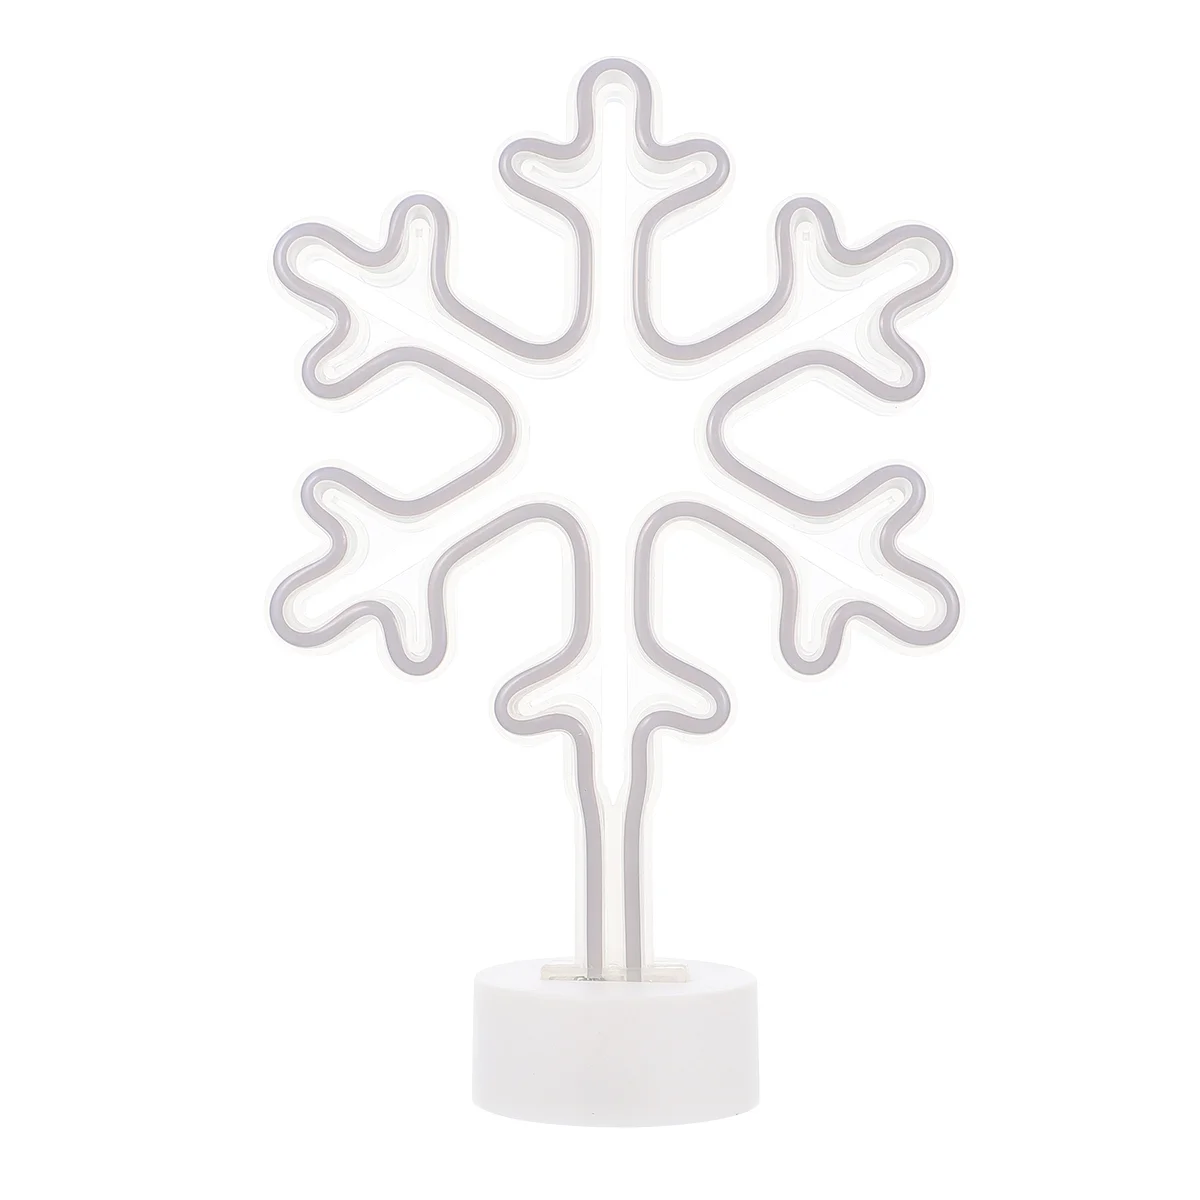 

1pc Exquisite Decorative Creative Reusable Durable Lightweight Desktop Adornment Snowflake Night Friends Family Relatives